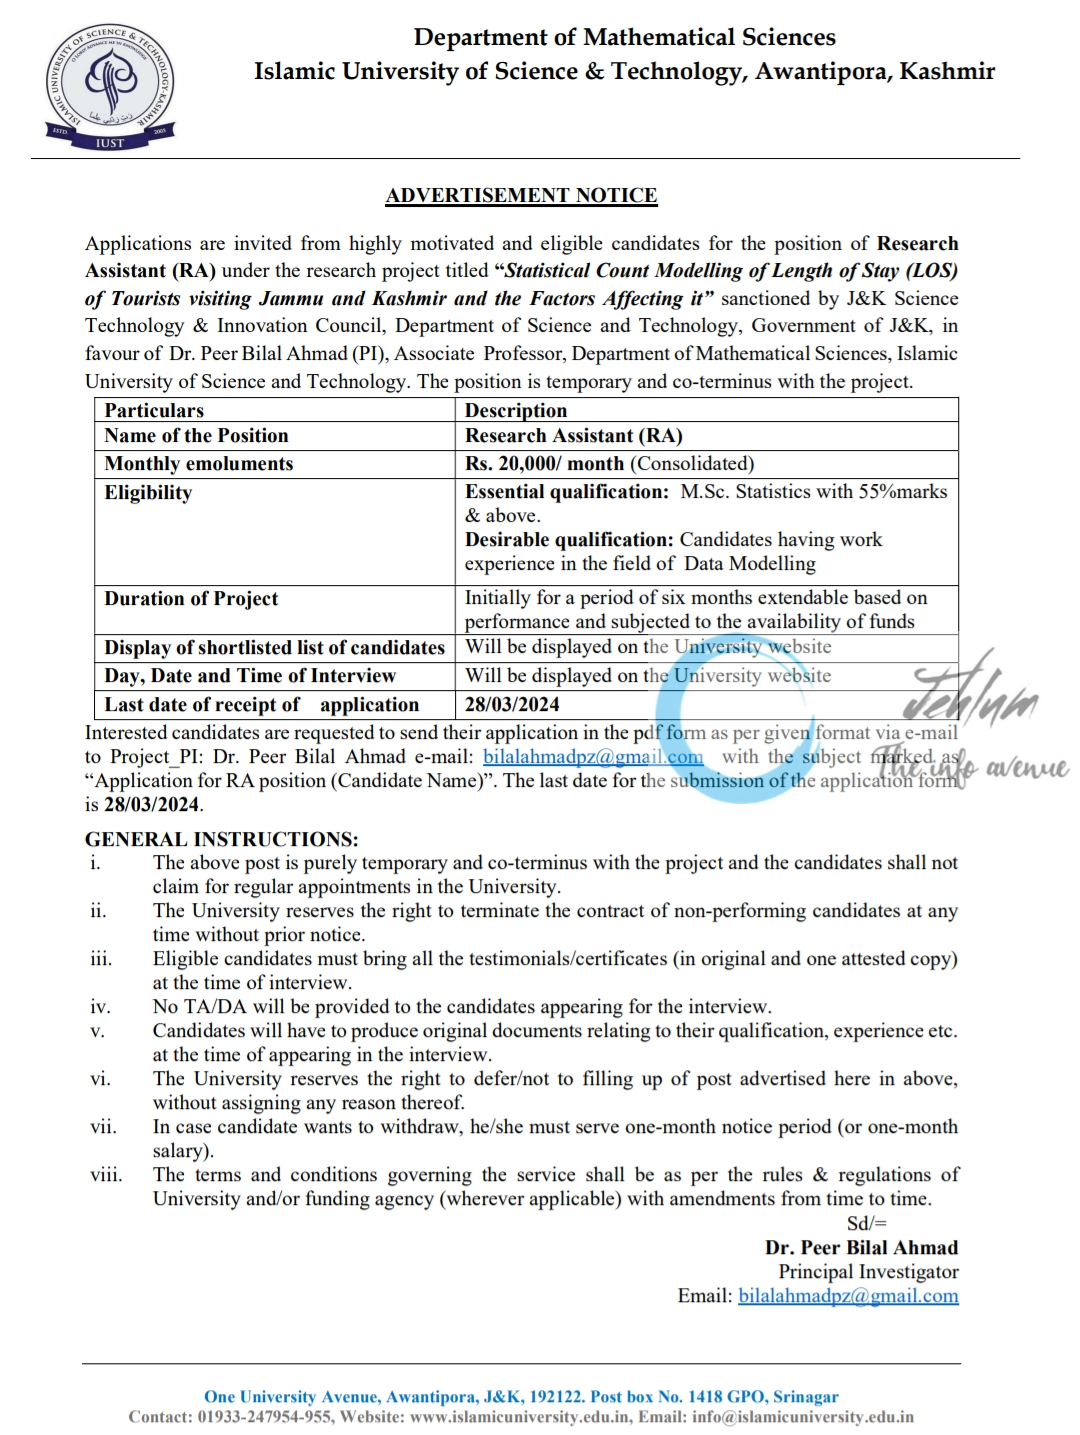 IUST Kashmir Deptt of Mathematical Sciences Advertisement Notice 2024